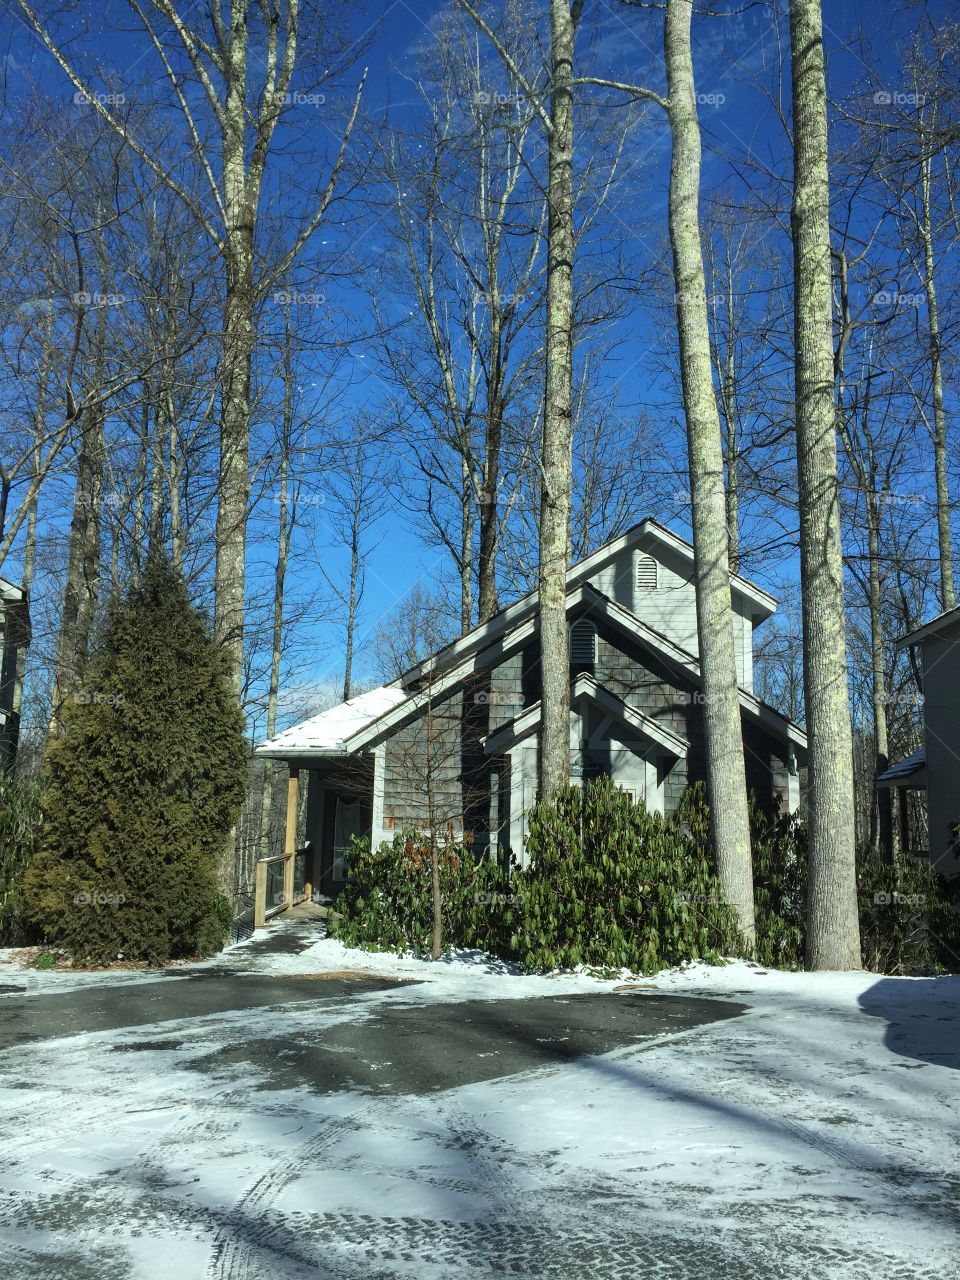 Beech Mountain Getaway Lodge